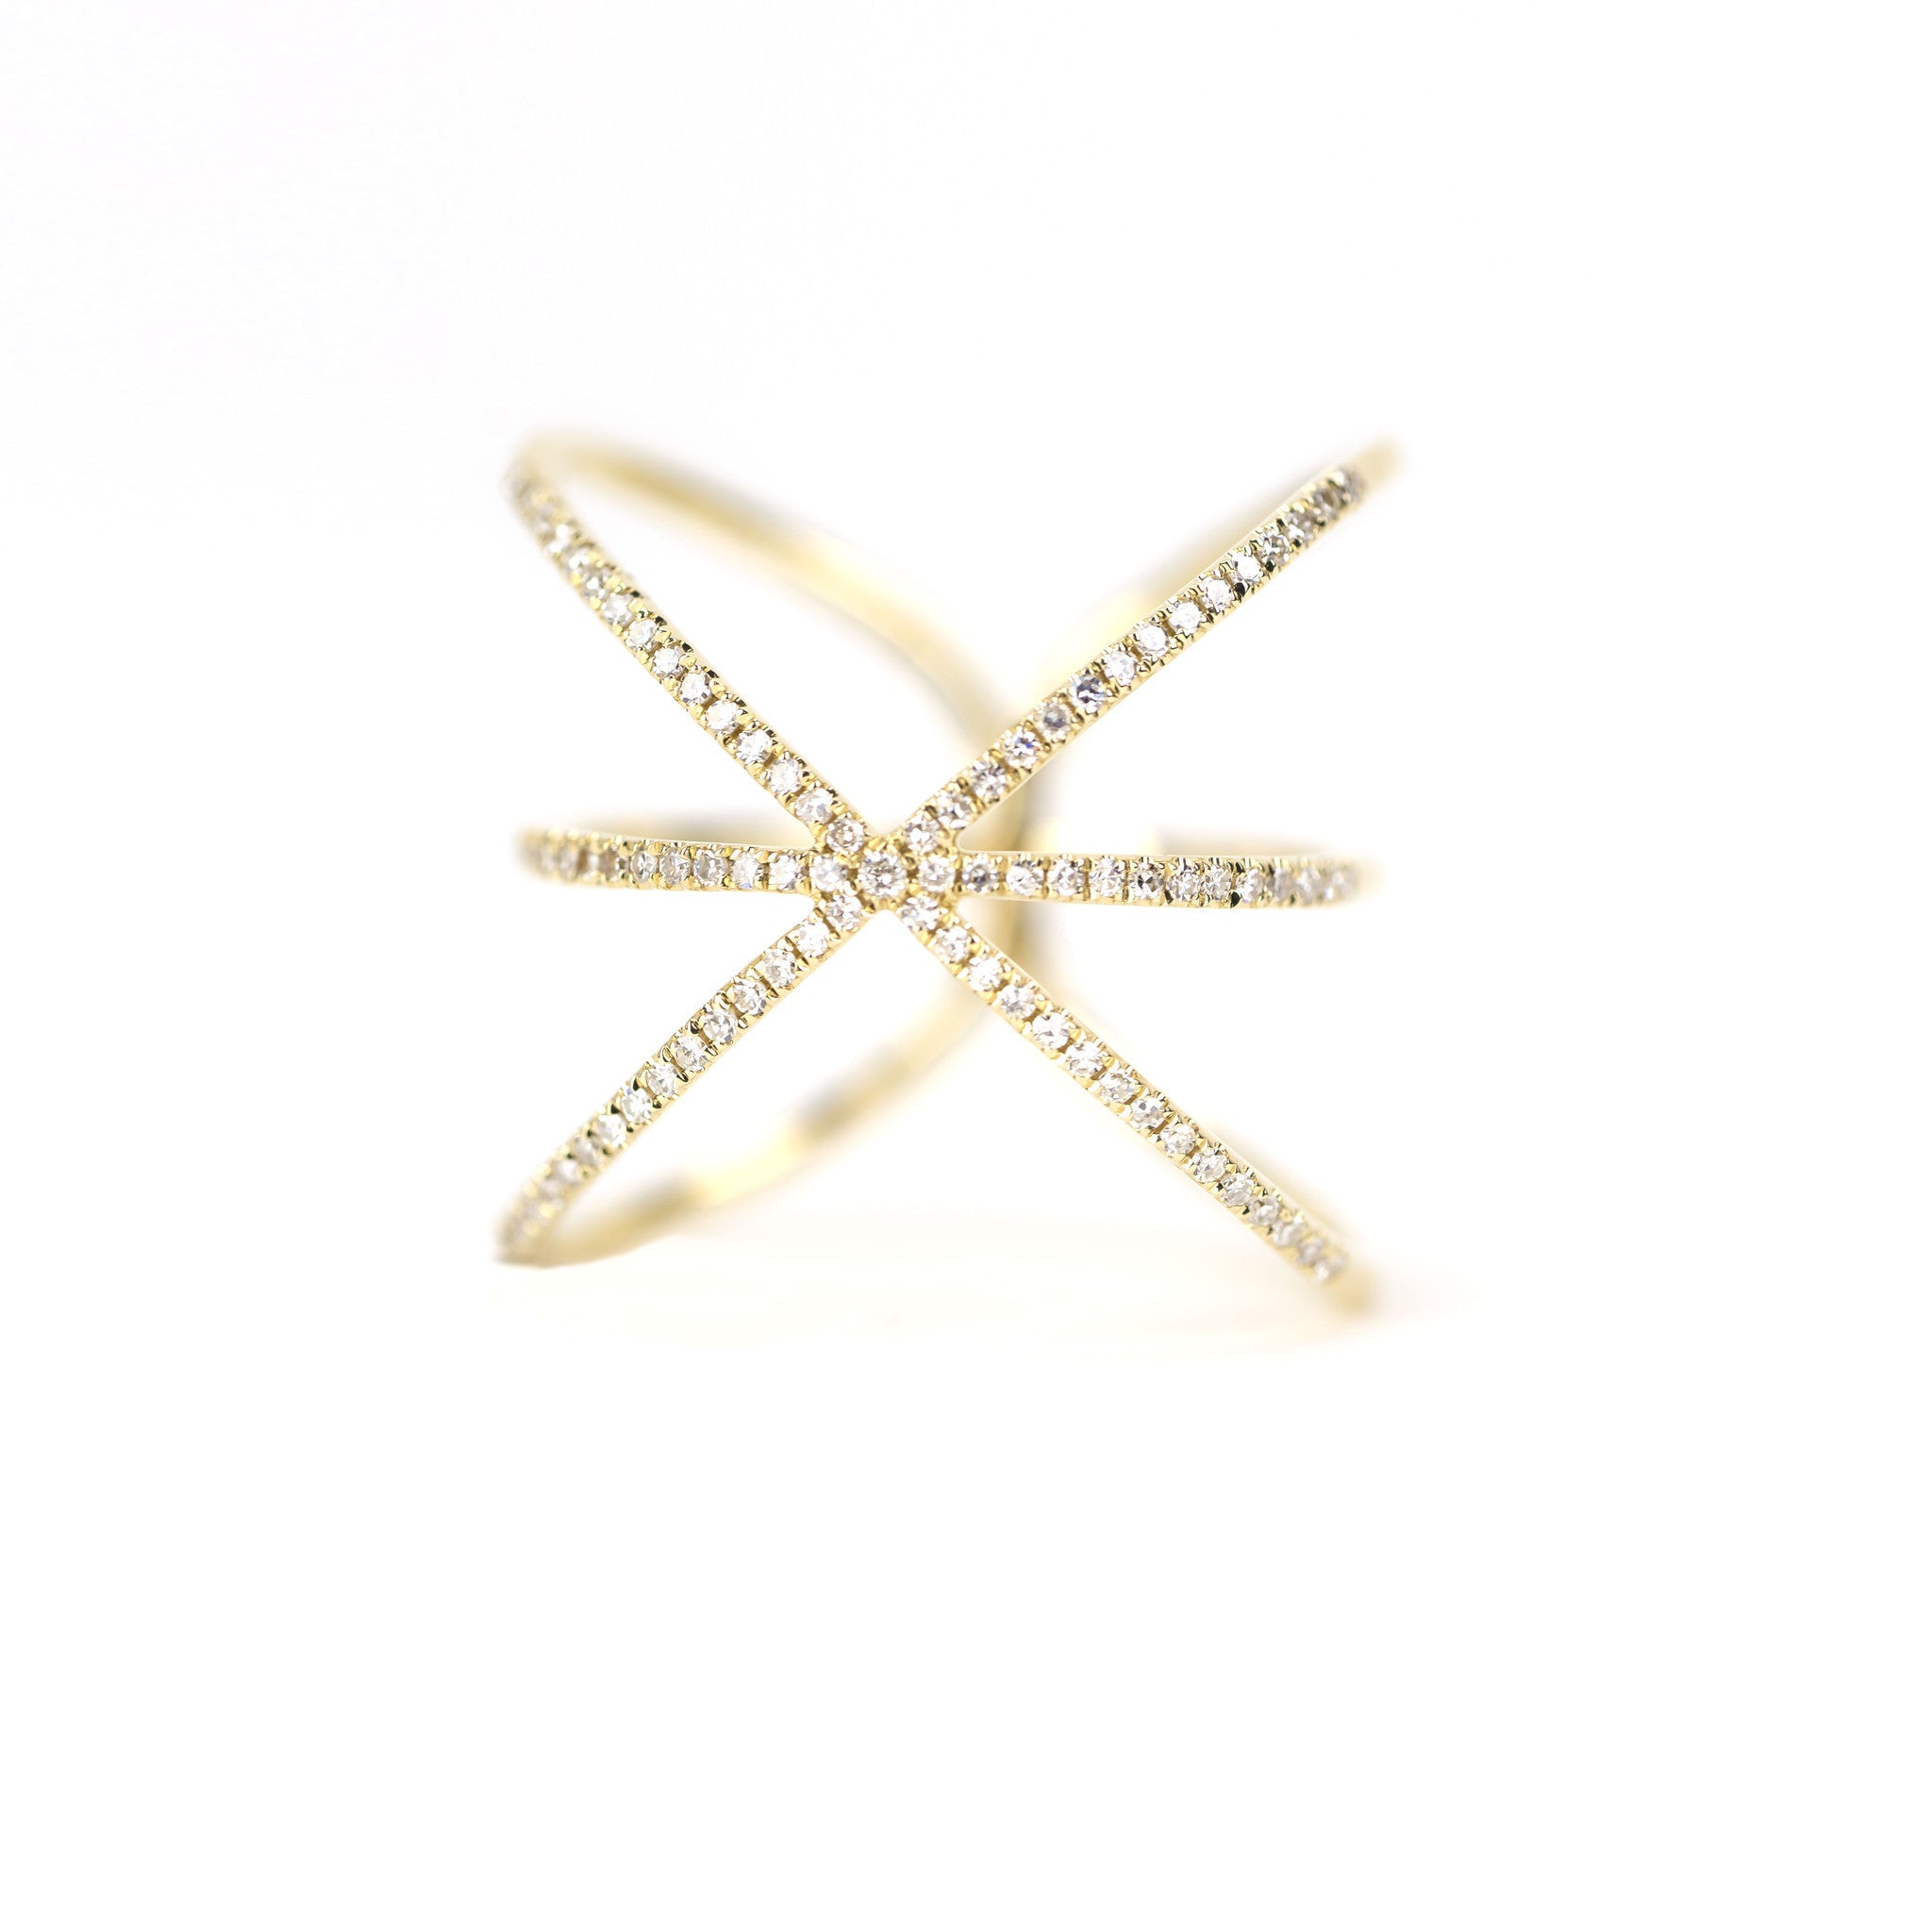 Asterisk Diamond Ring by Atheria Jewelry